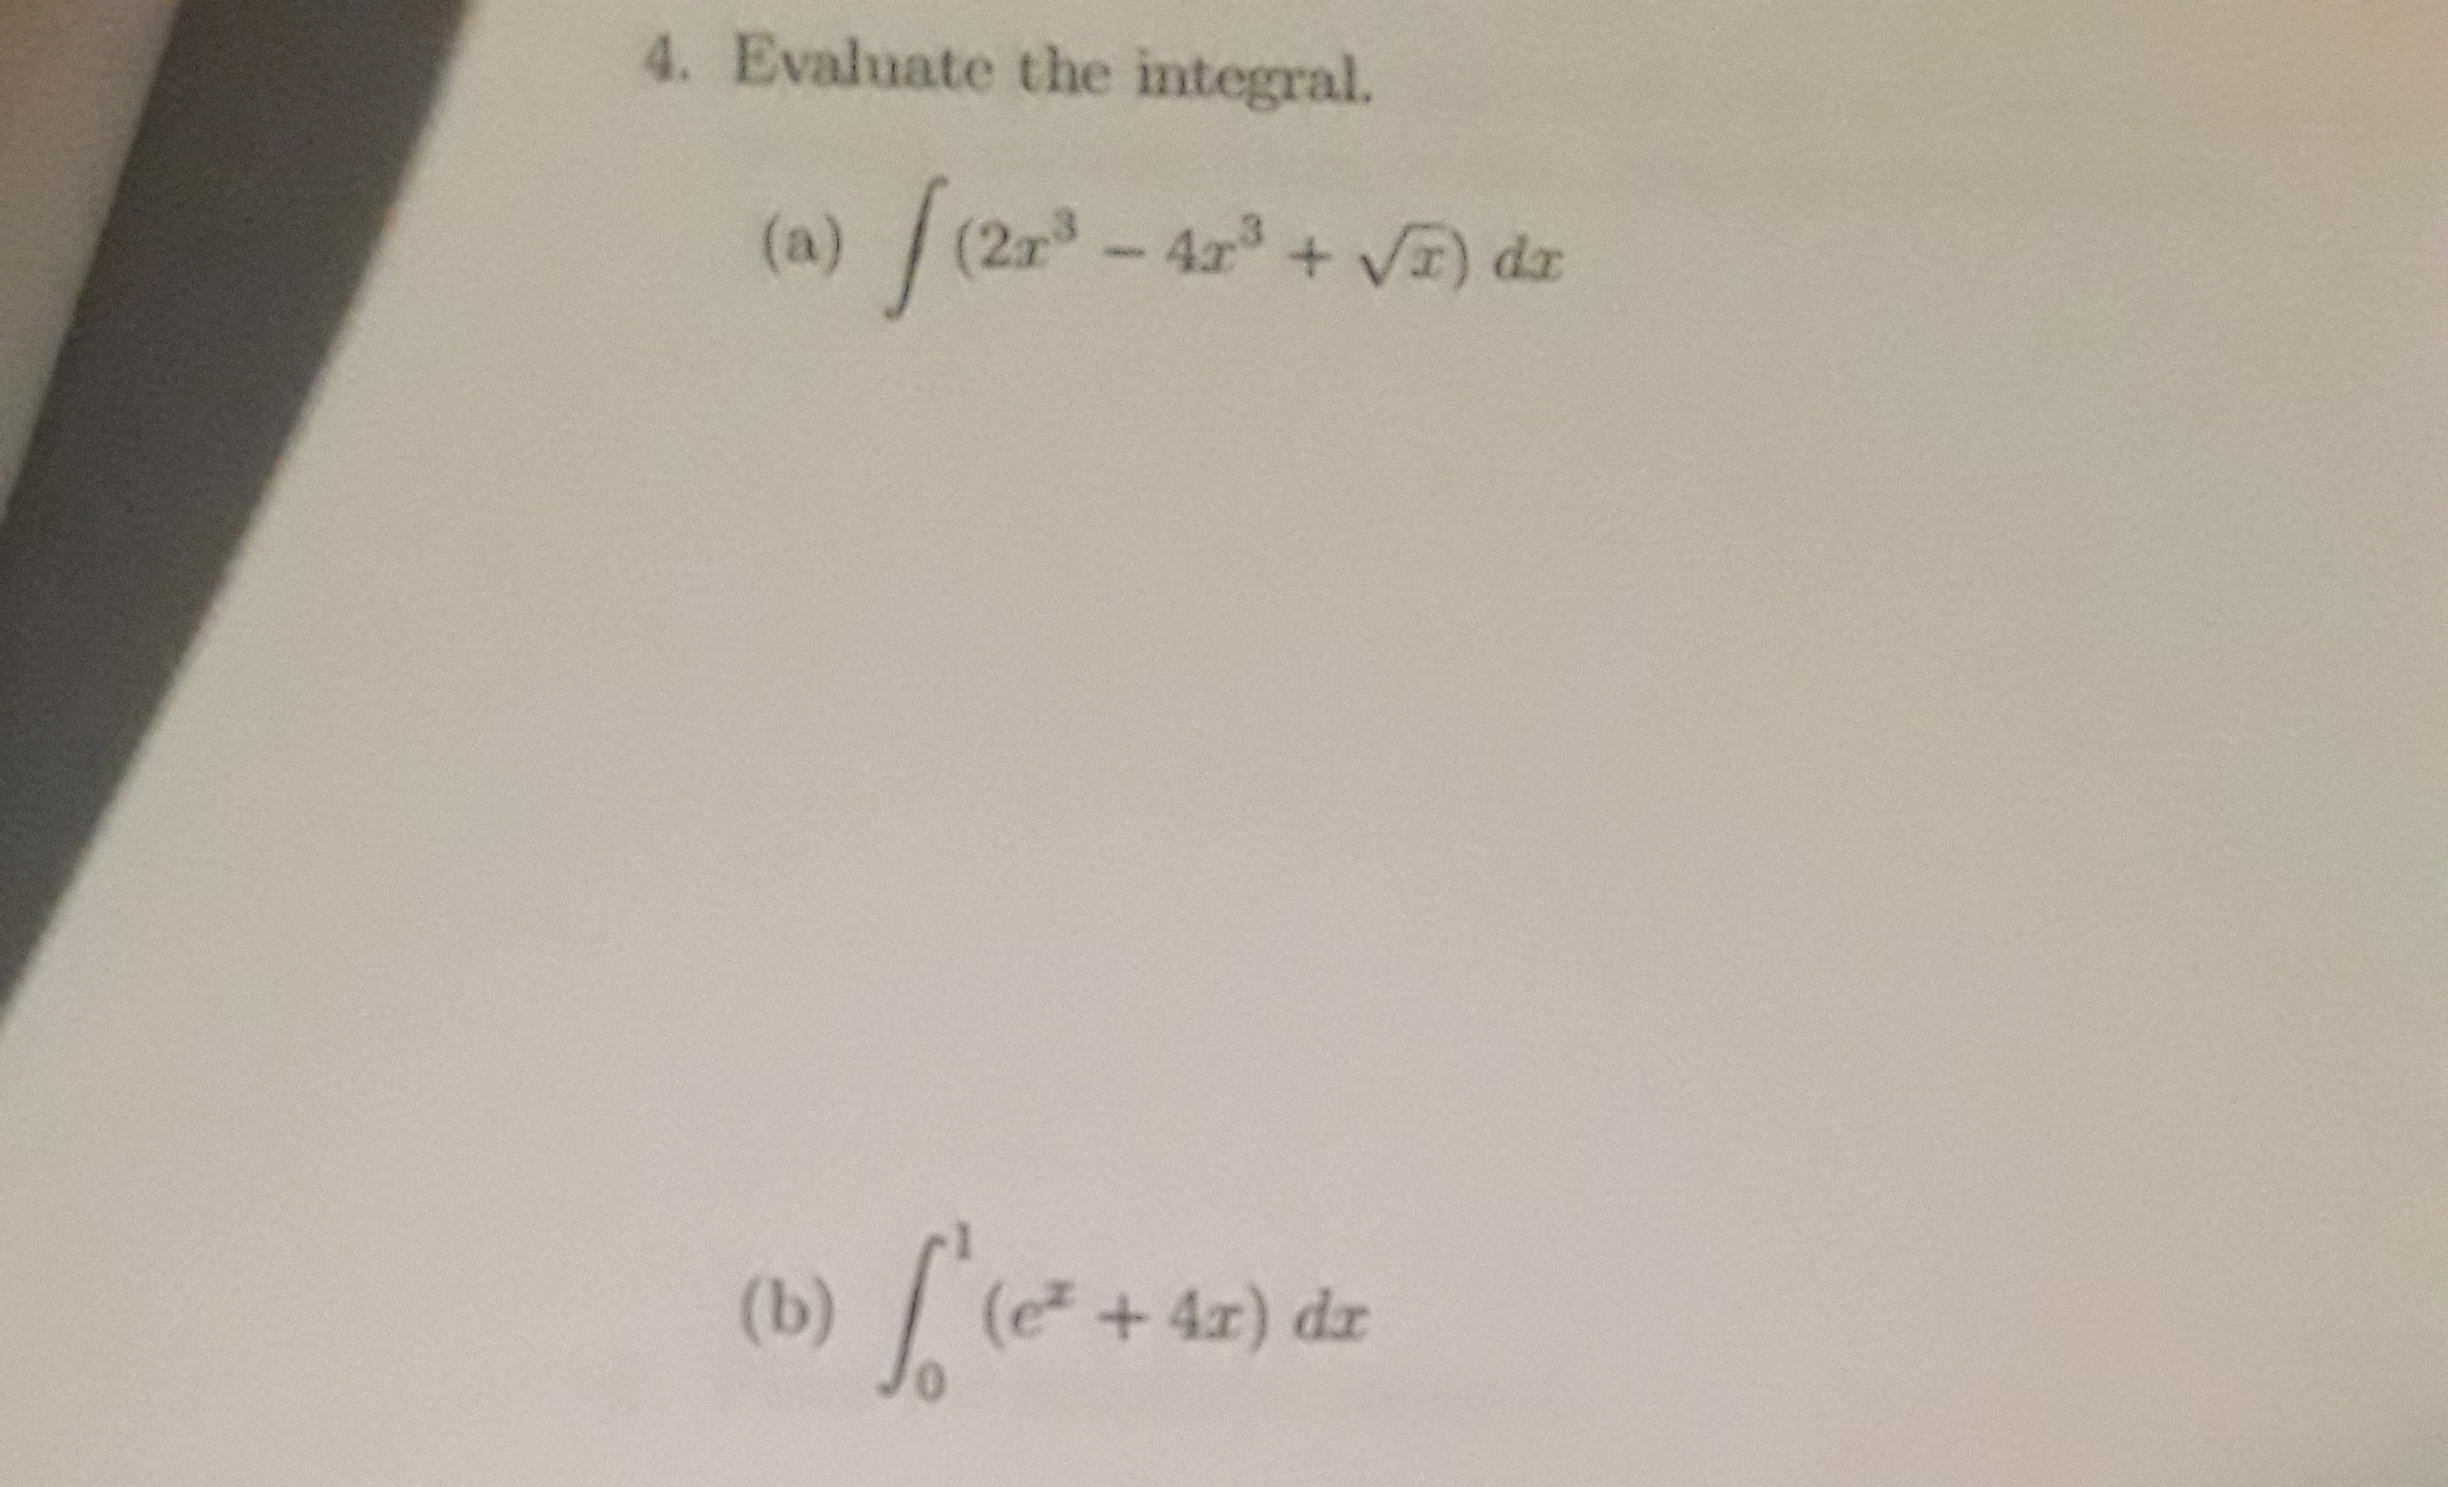 4. Evaluate the integral.
(a) (2r-4r + VE) dz
+ 4x) dr
